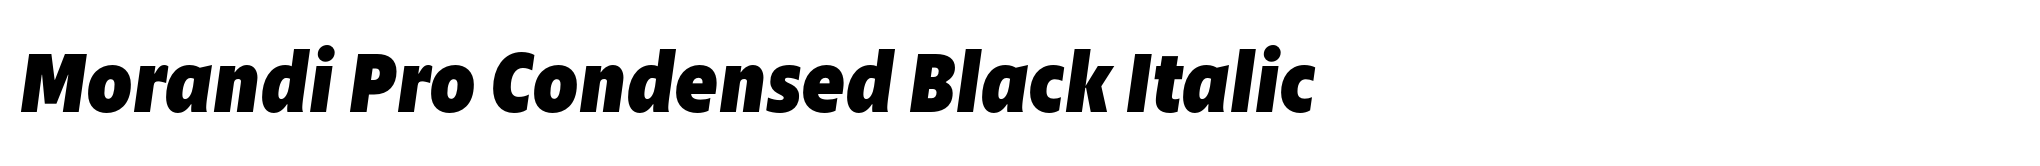 Morandi Pro Condensed Black Italic image